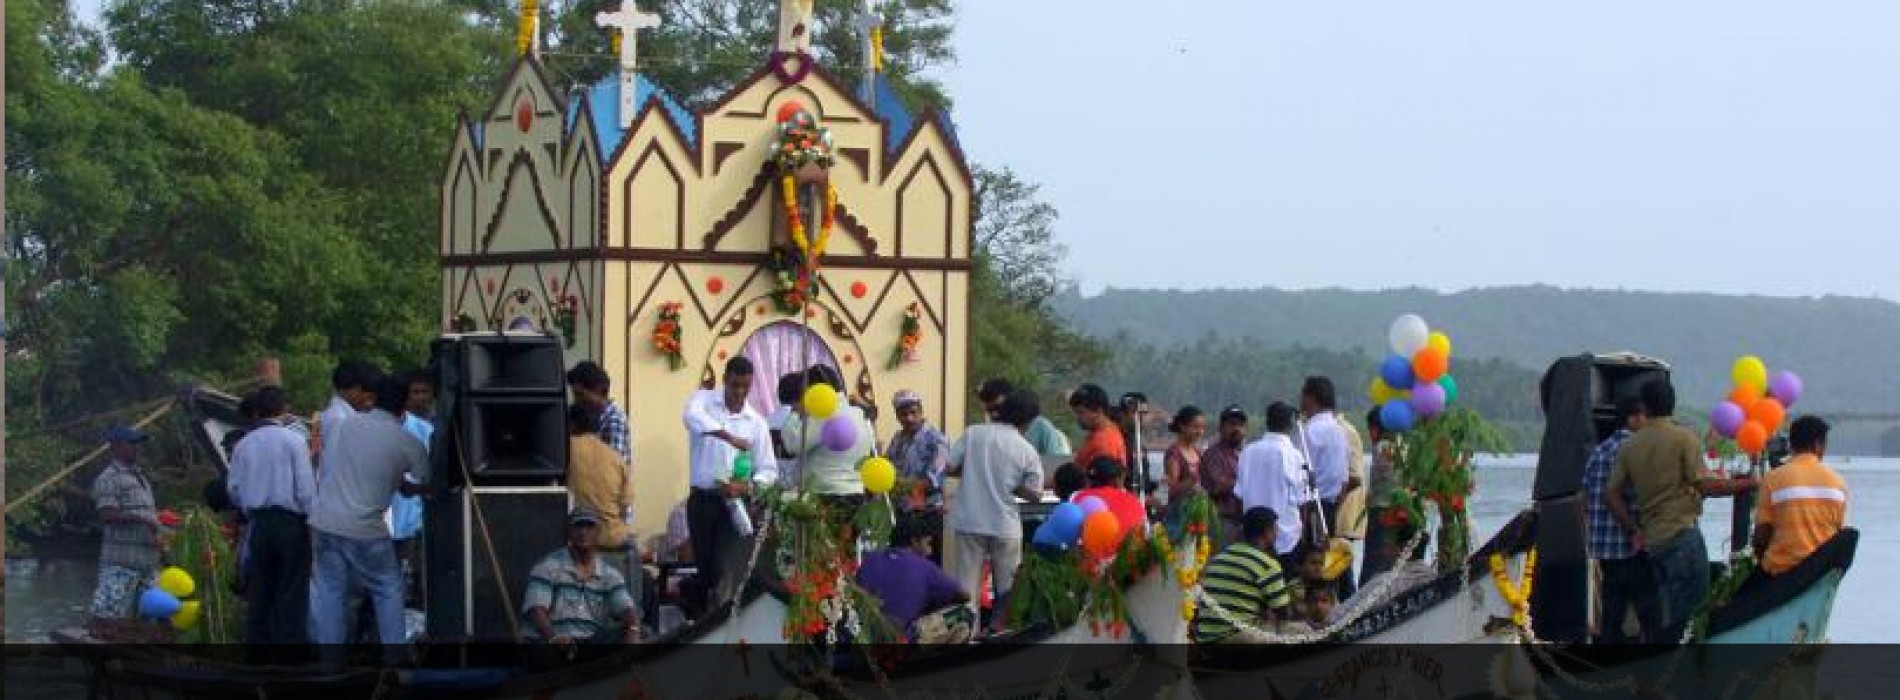 Unique Monsoon Festivals of Goa